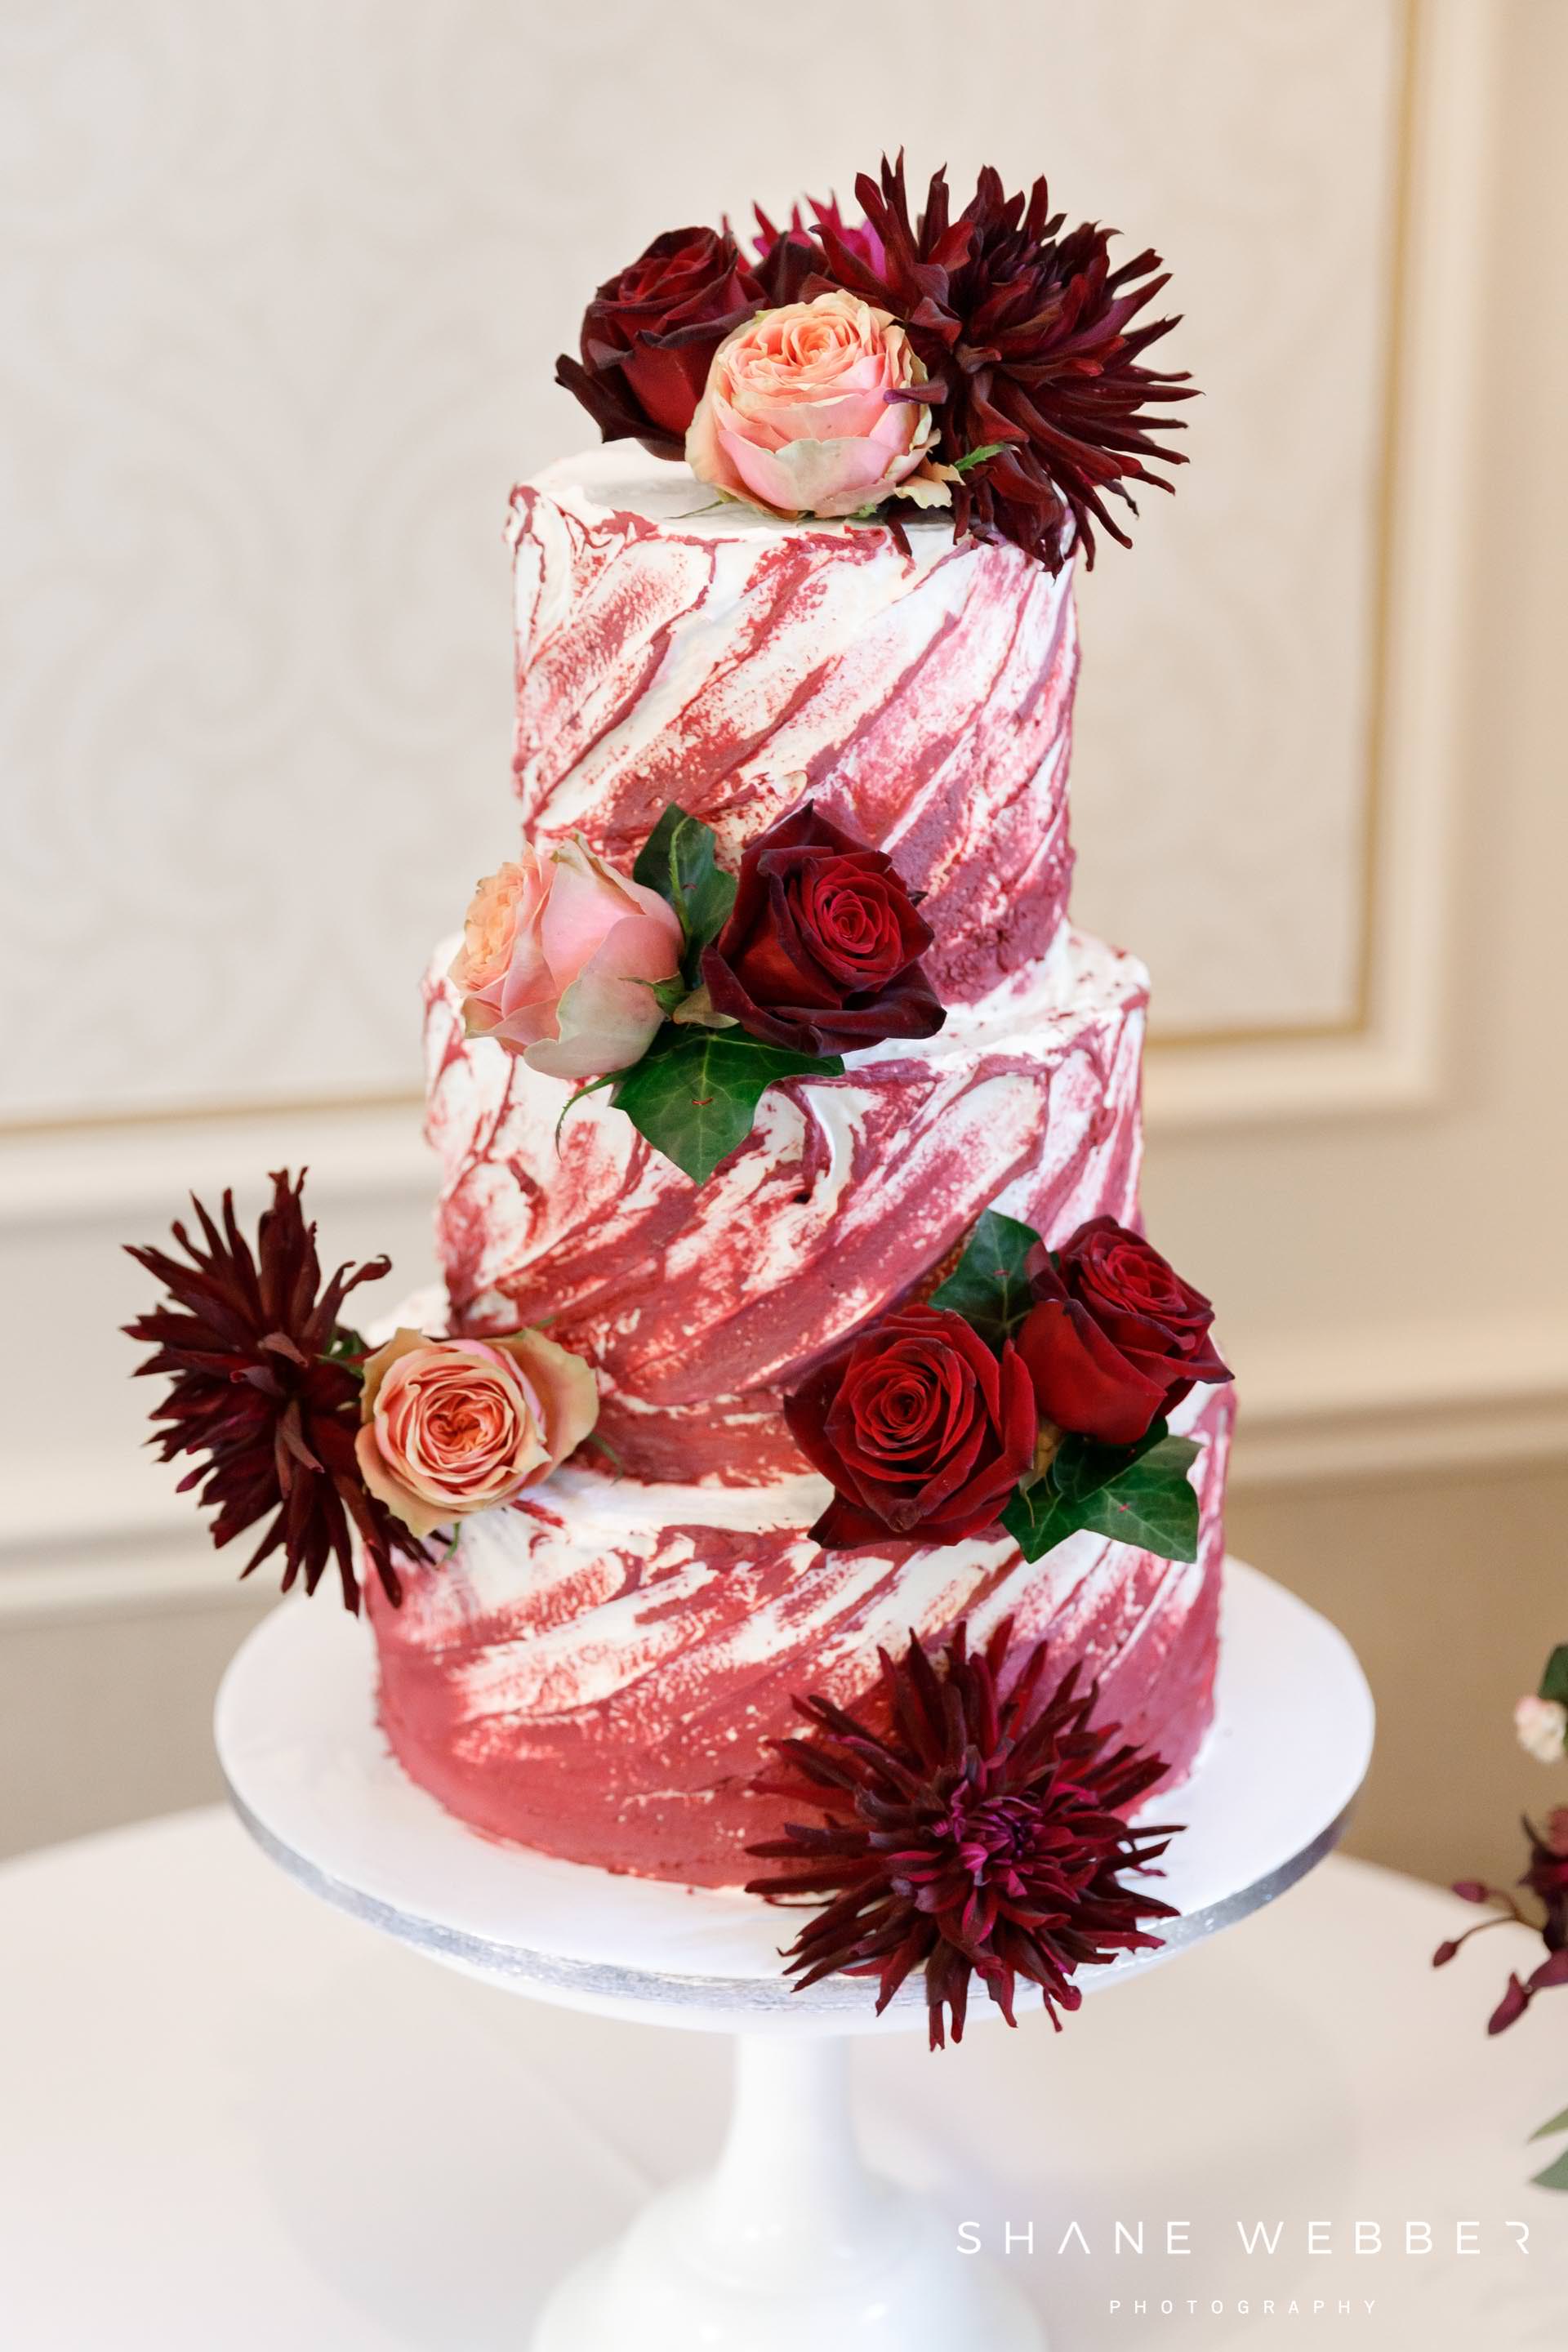 Autumnal wedding cake design ideas